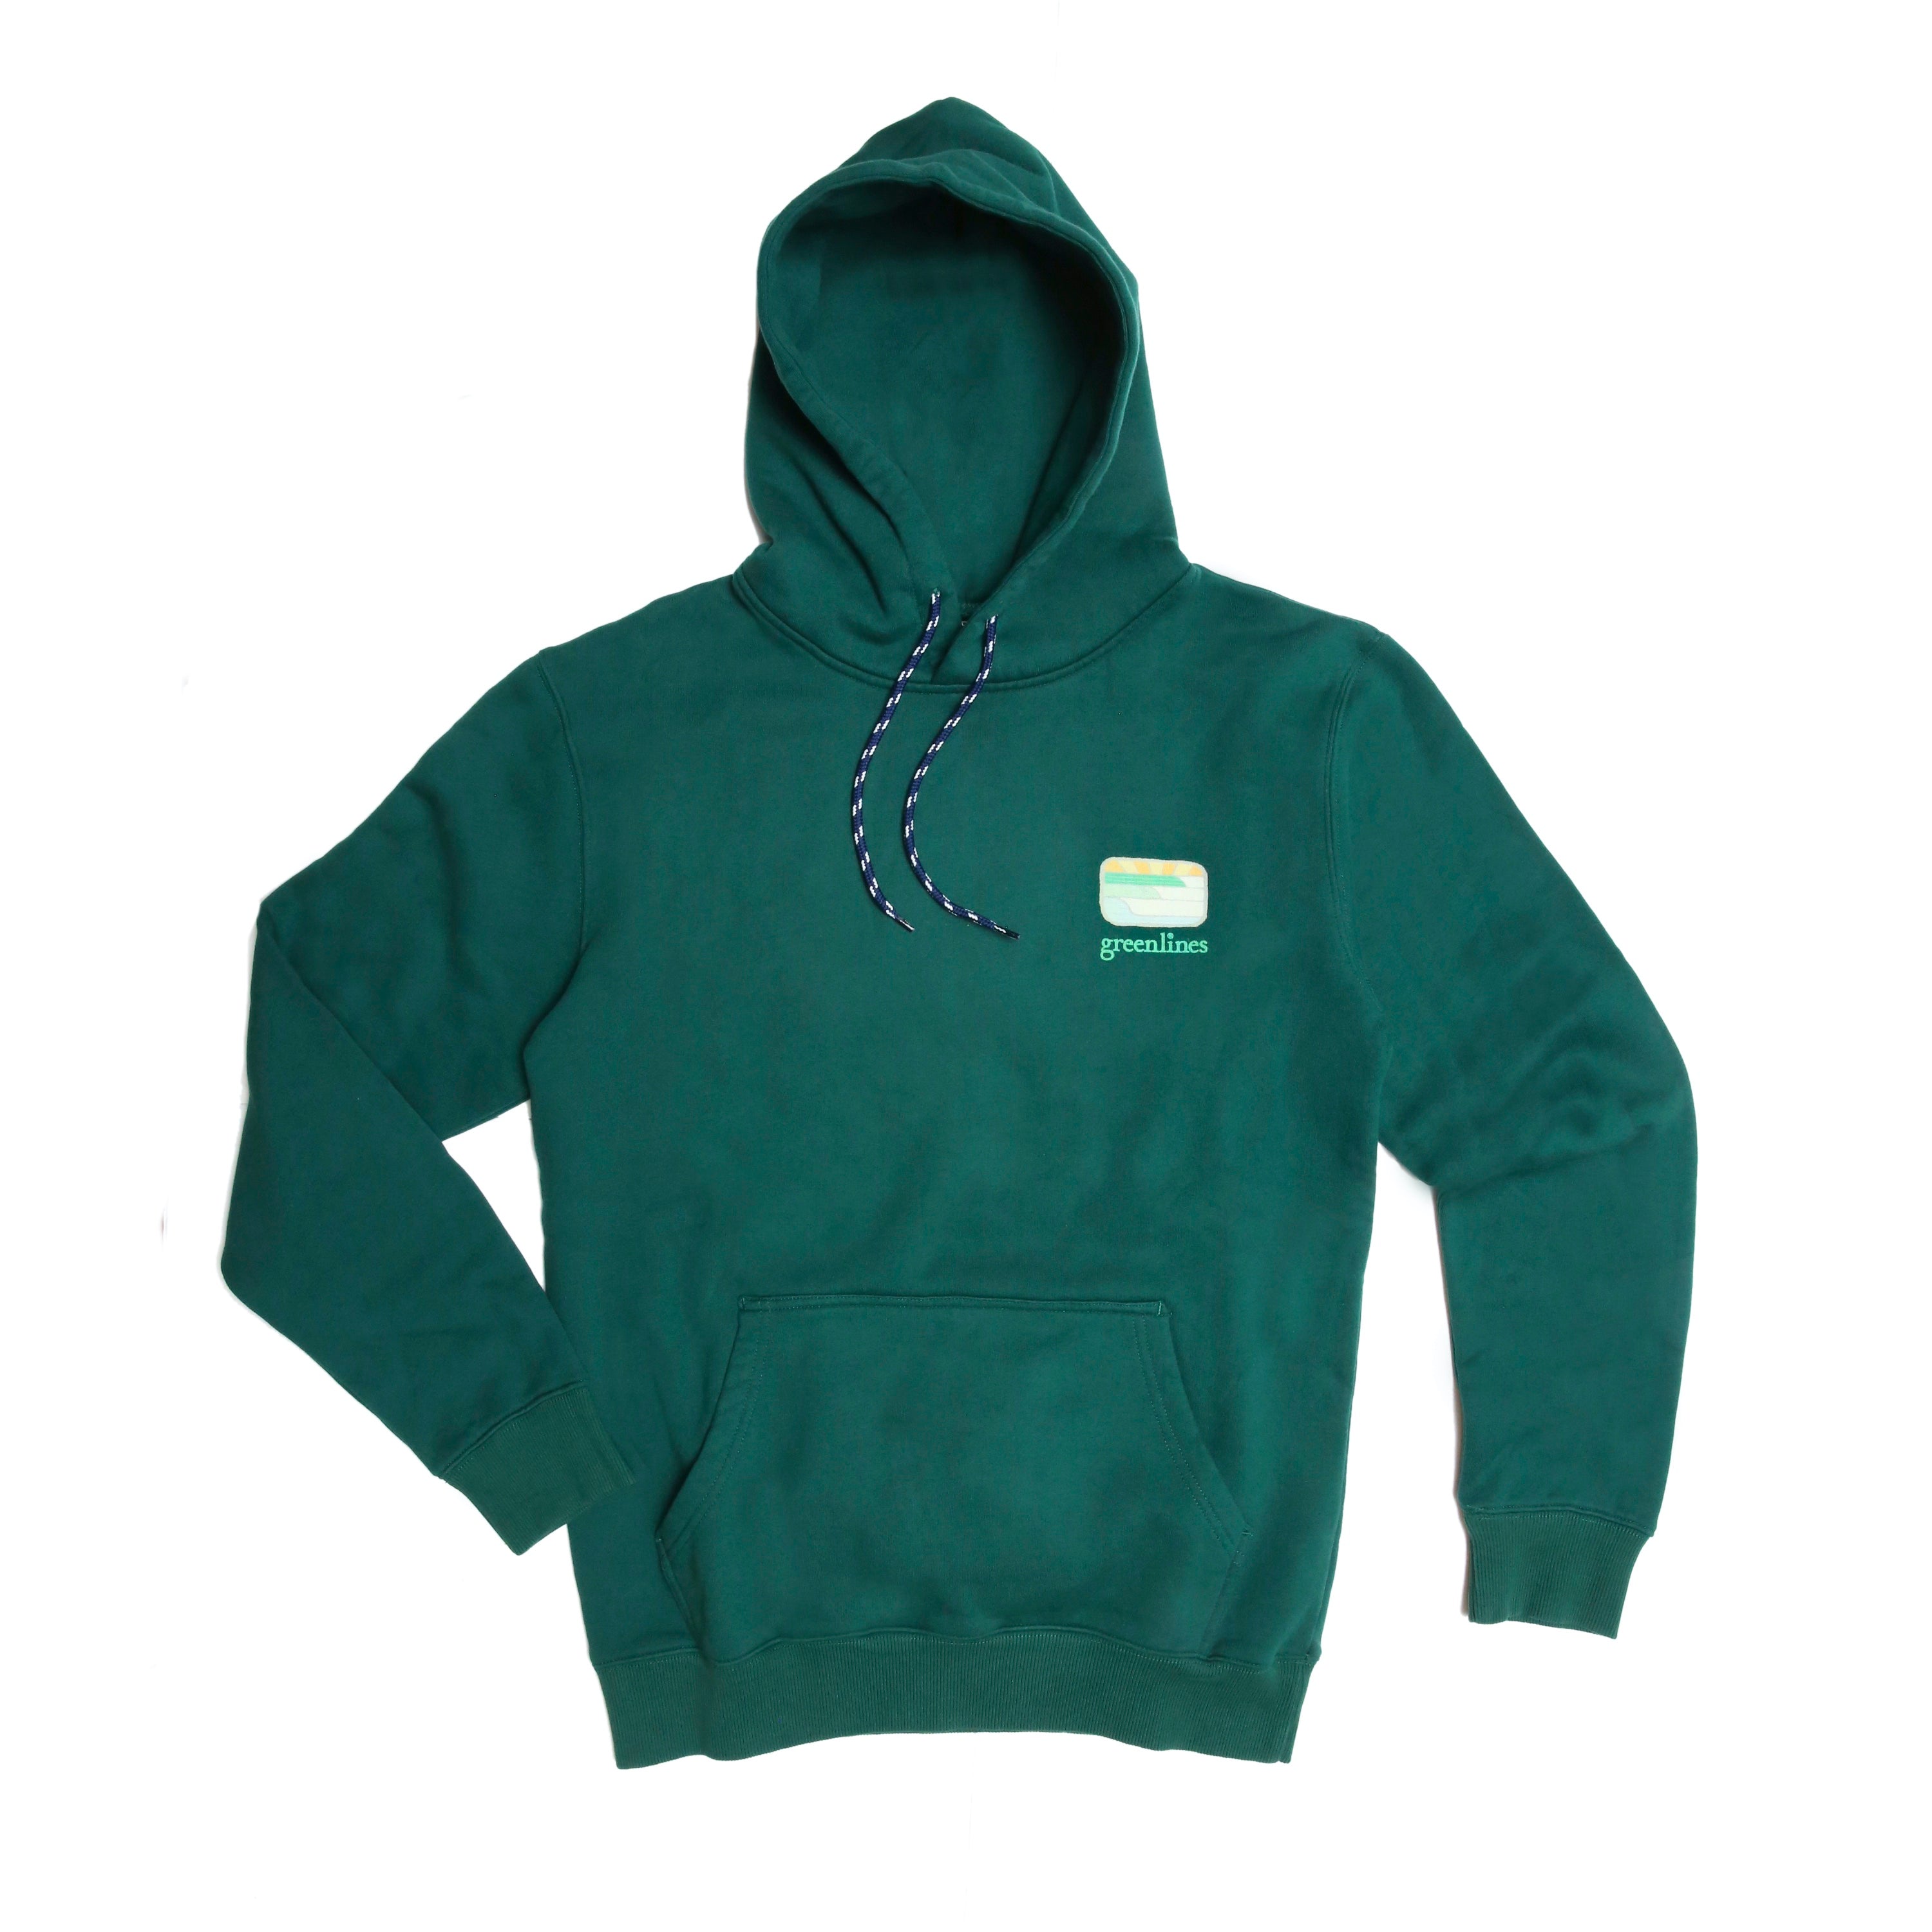 Greenlines Premium Garment dyed Logo Sweatshirt Pullover